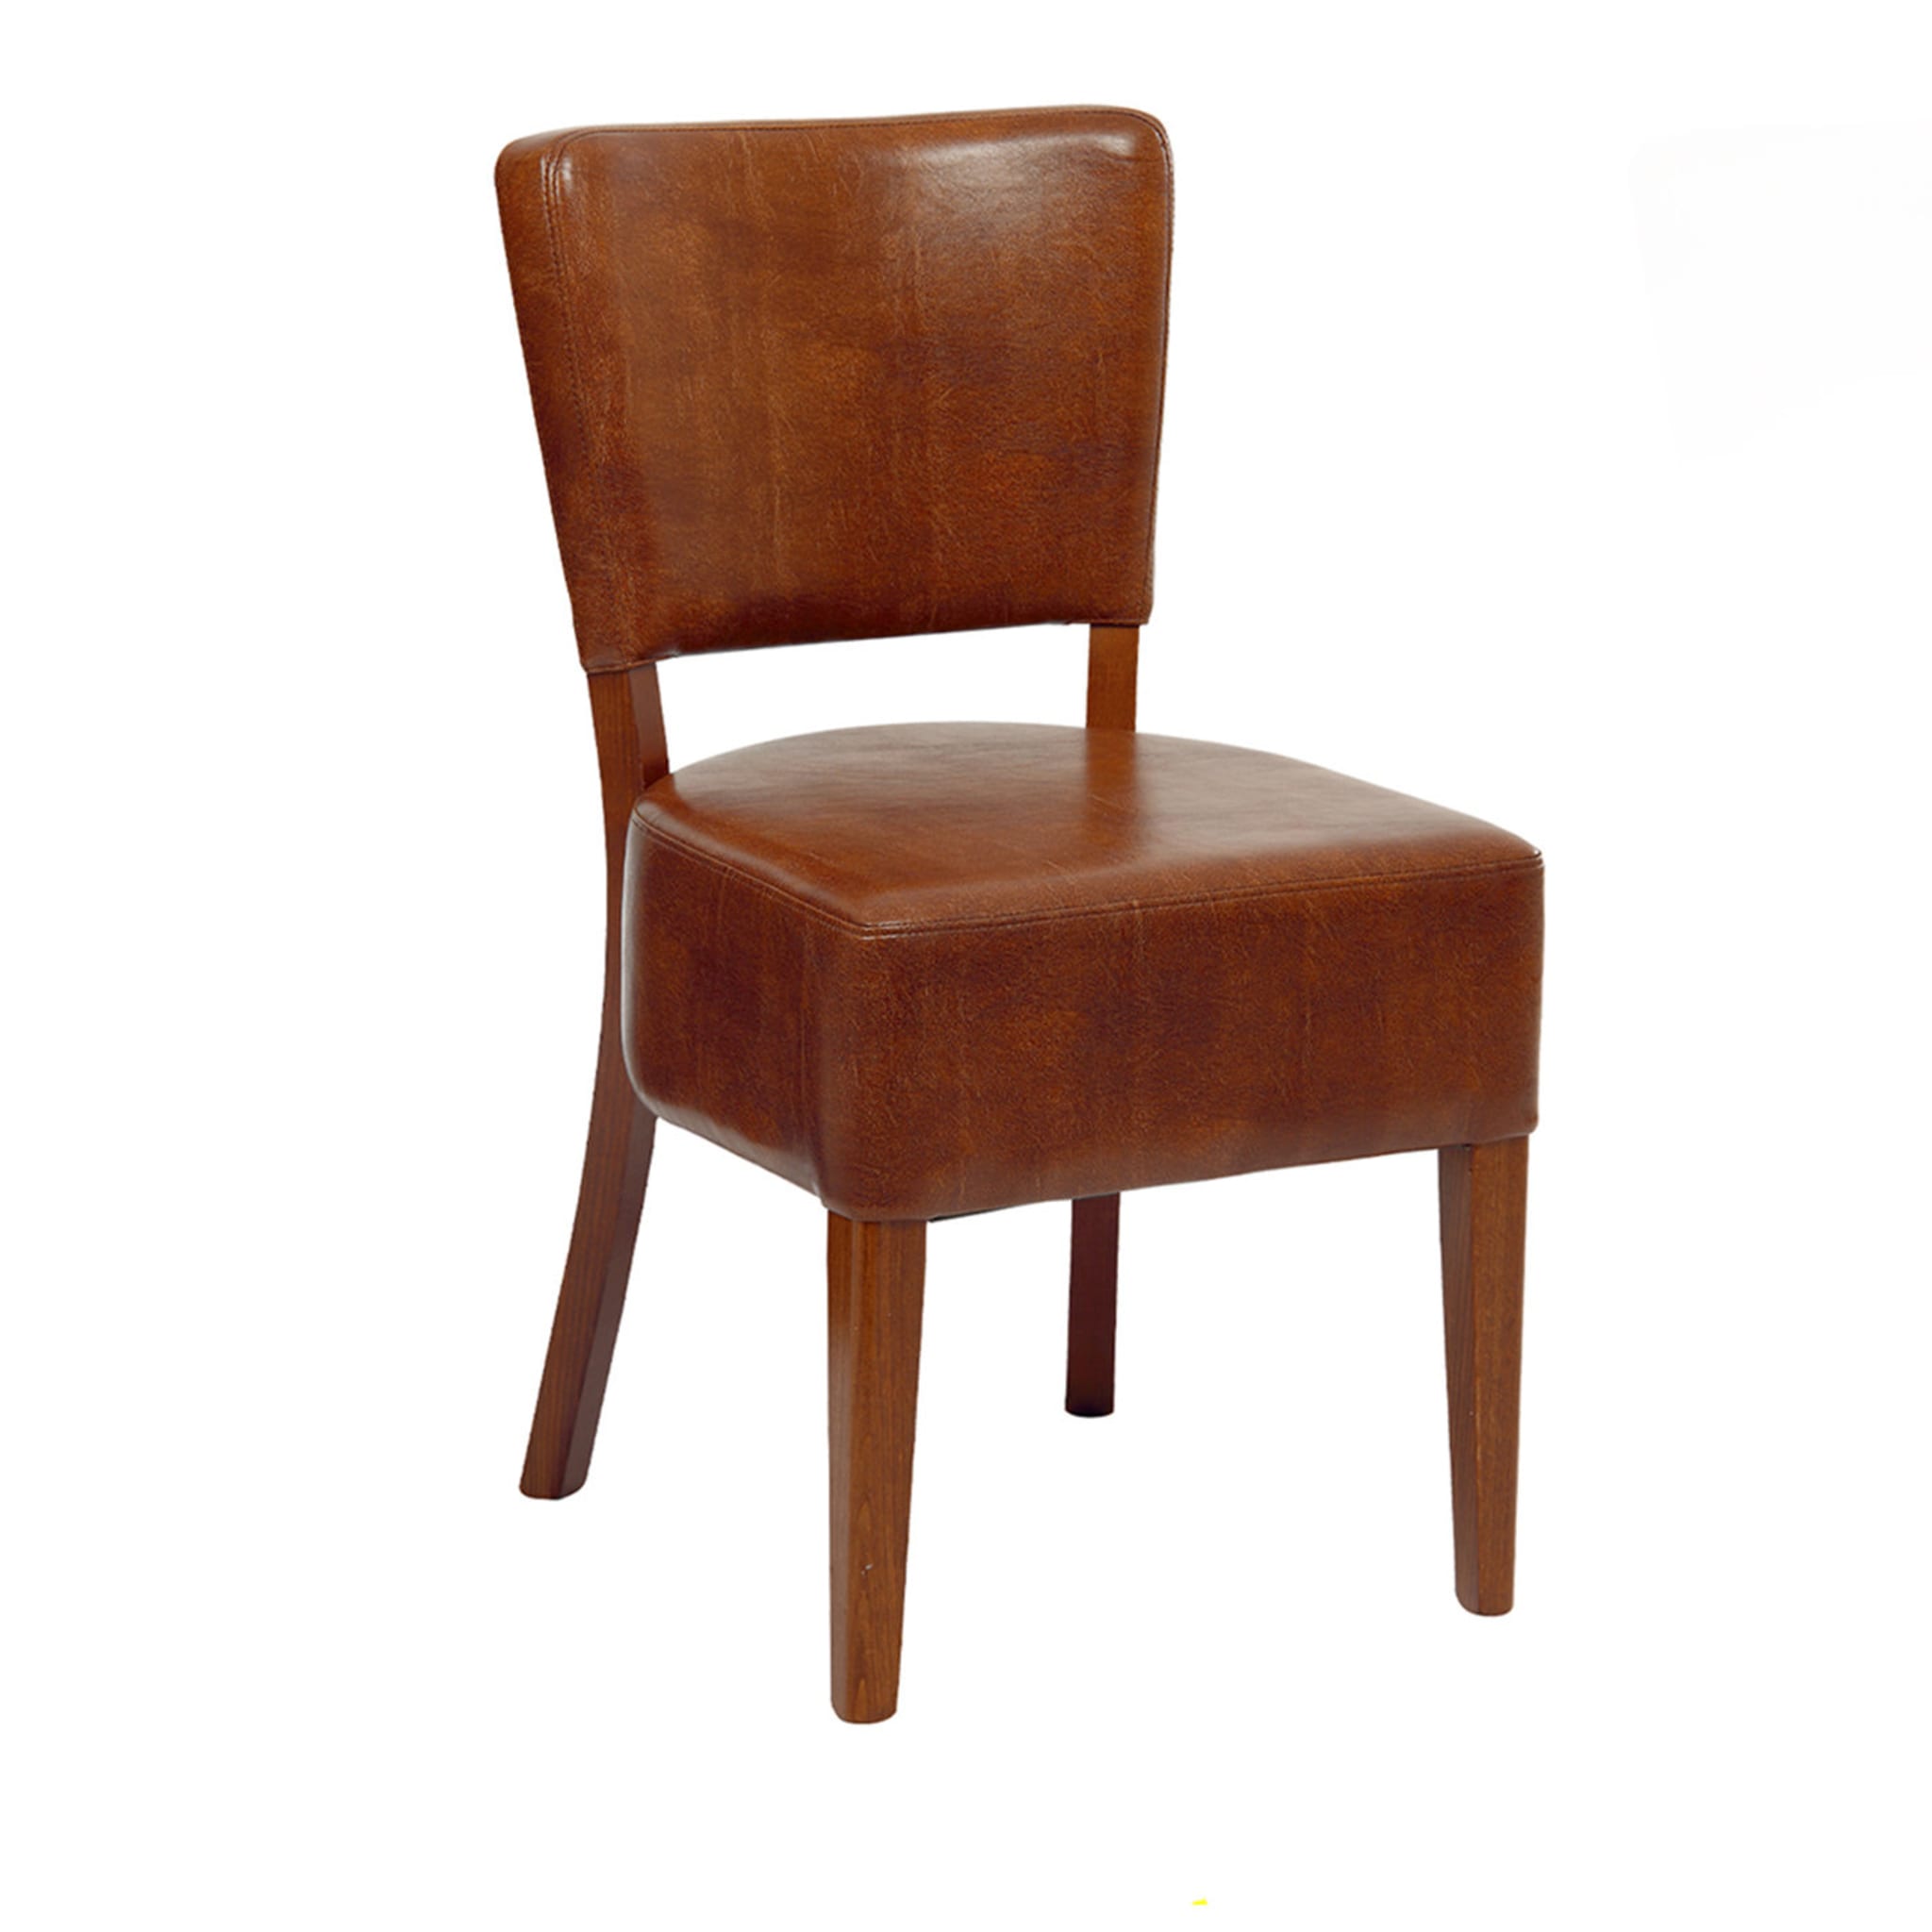 Marsiglia Set of 2 Brown Chairs - Main view